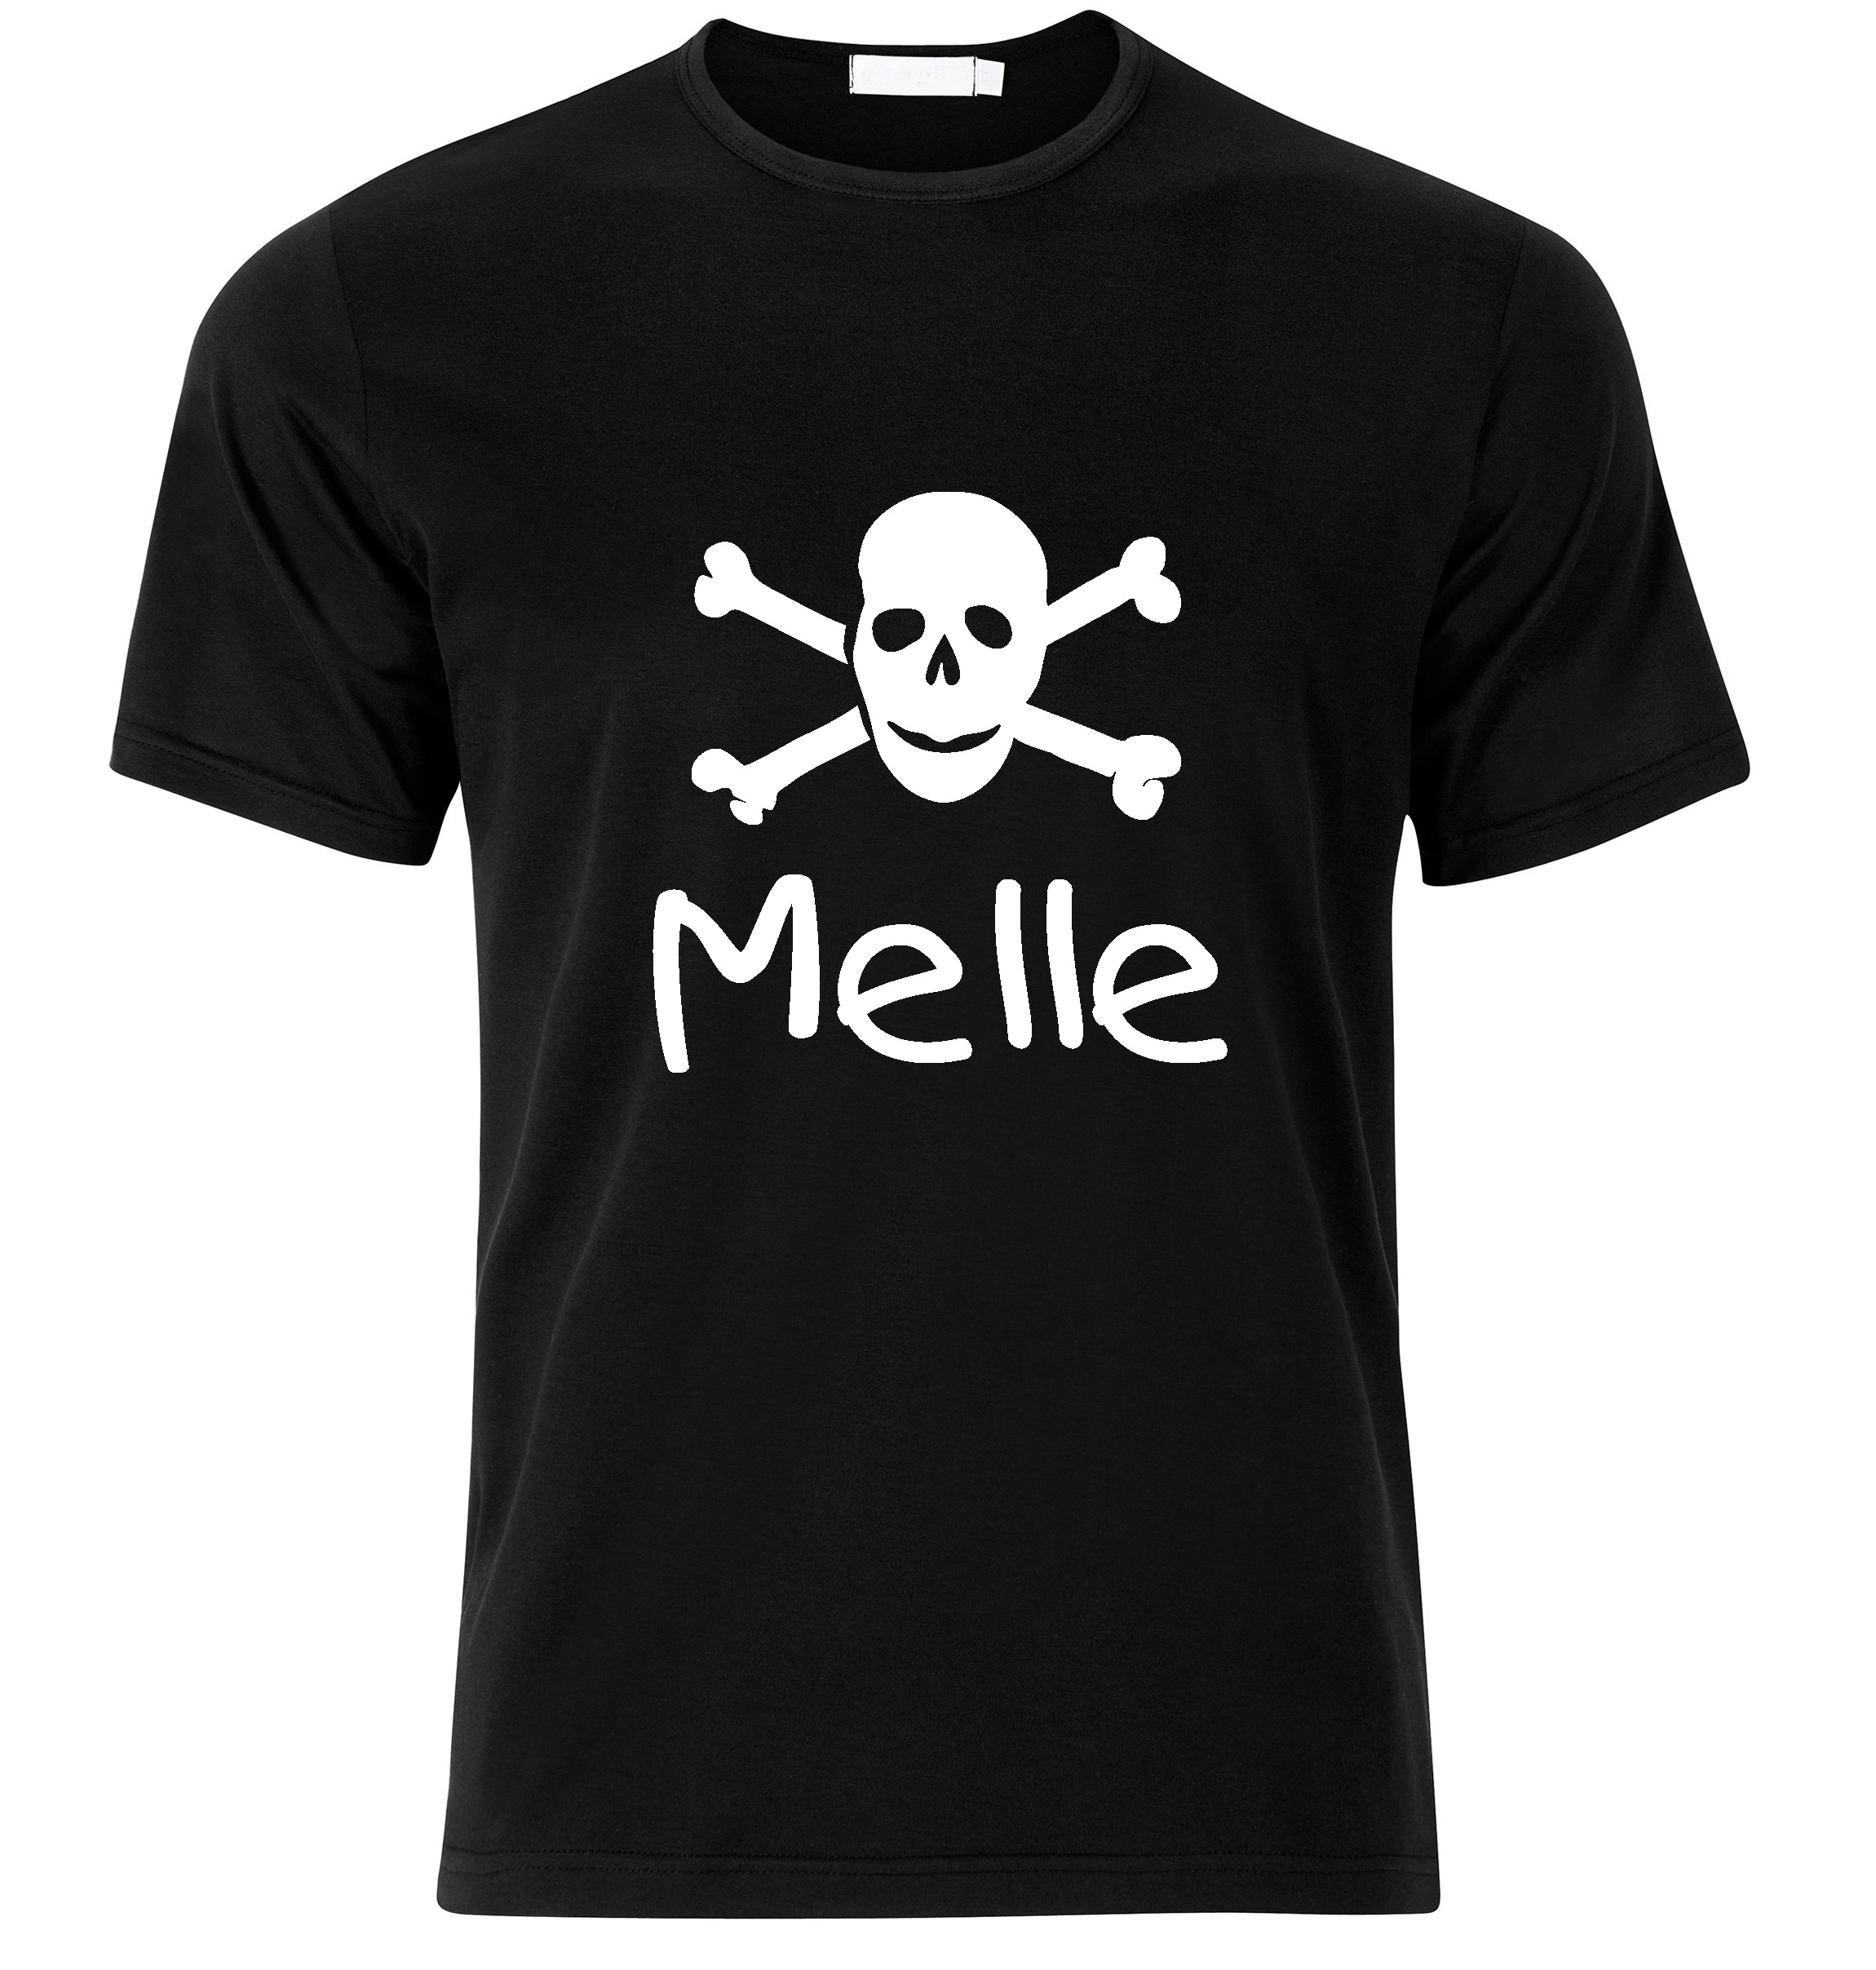 T-Shirt Melle Jolly Roger, Totenkopf